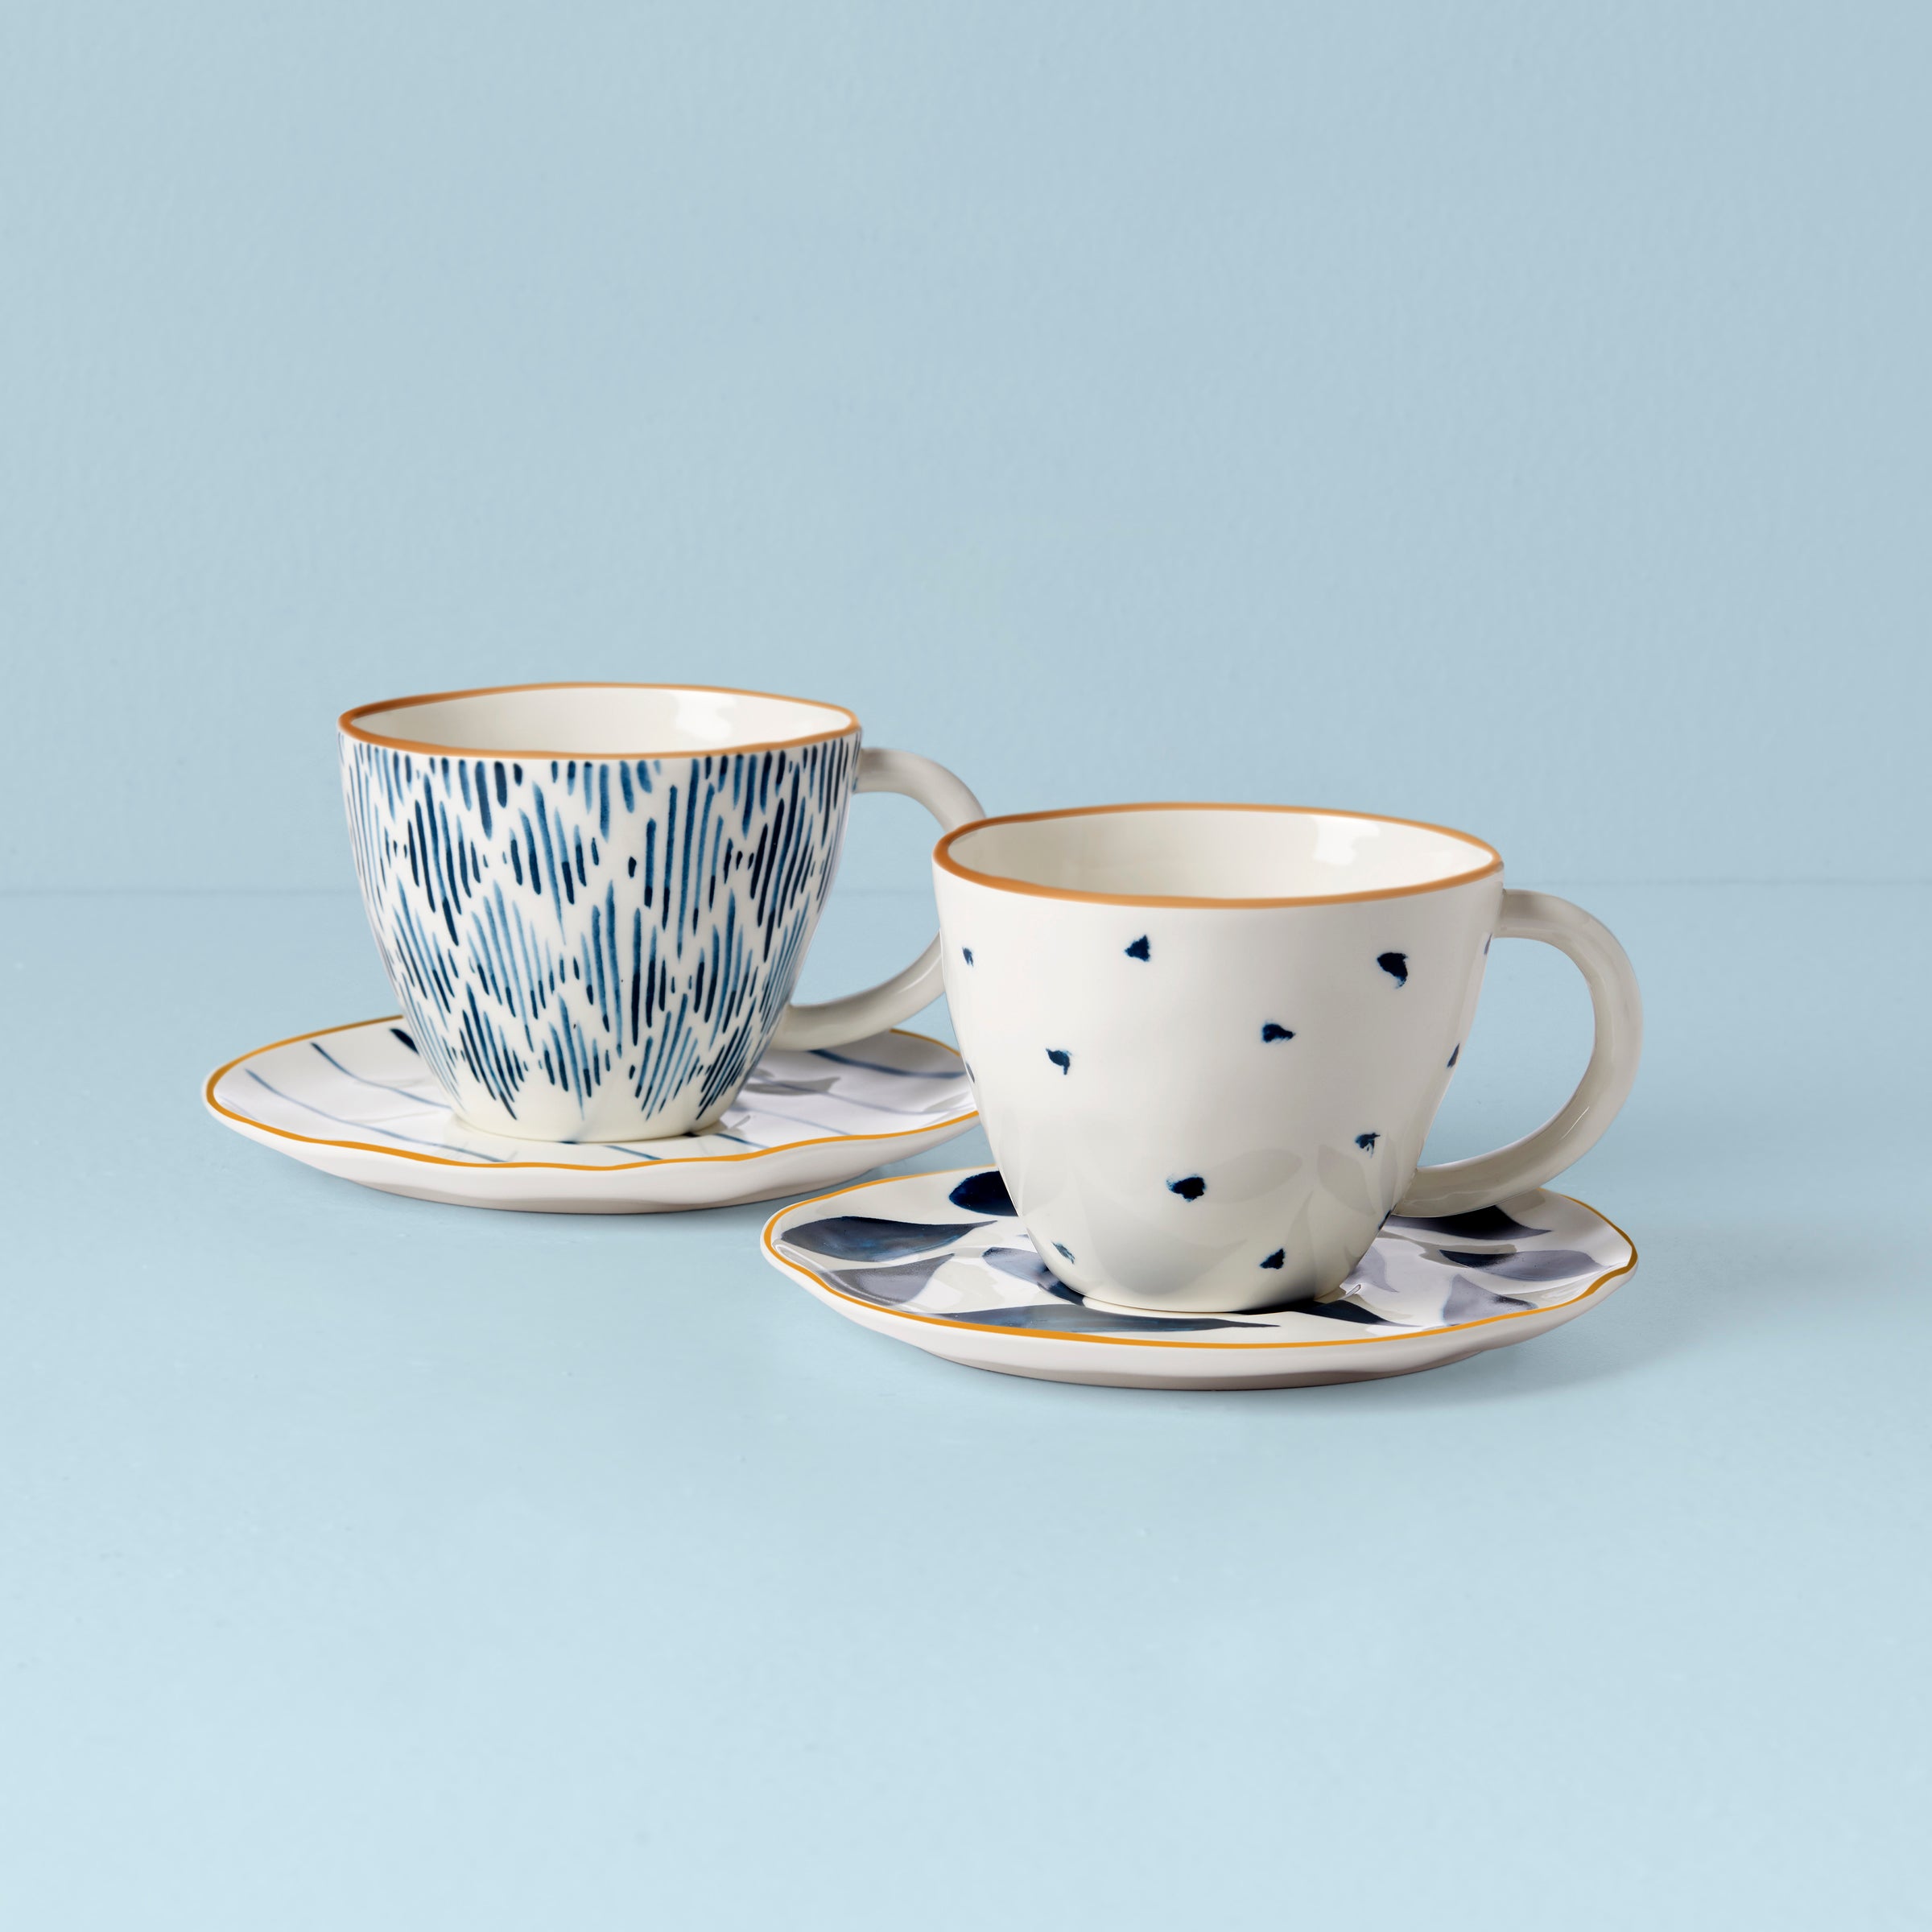 Vintage Lenox “Harvest” Teacup and Saucer American Tea Cup Set